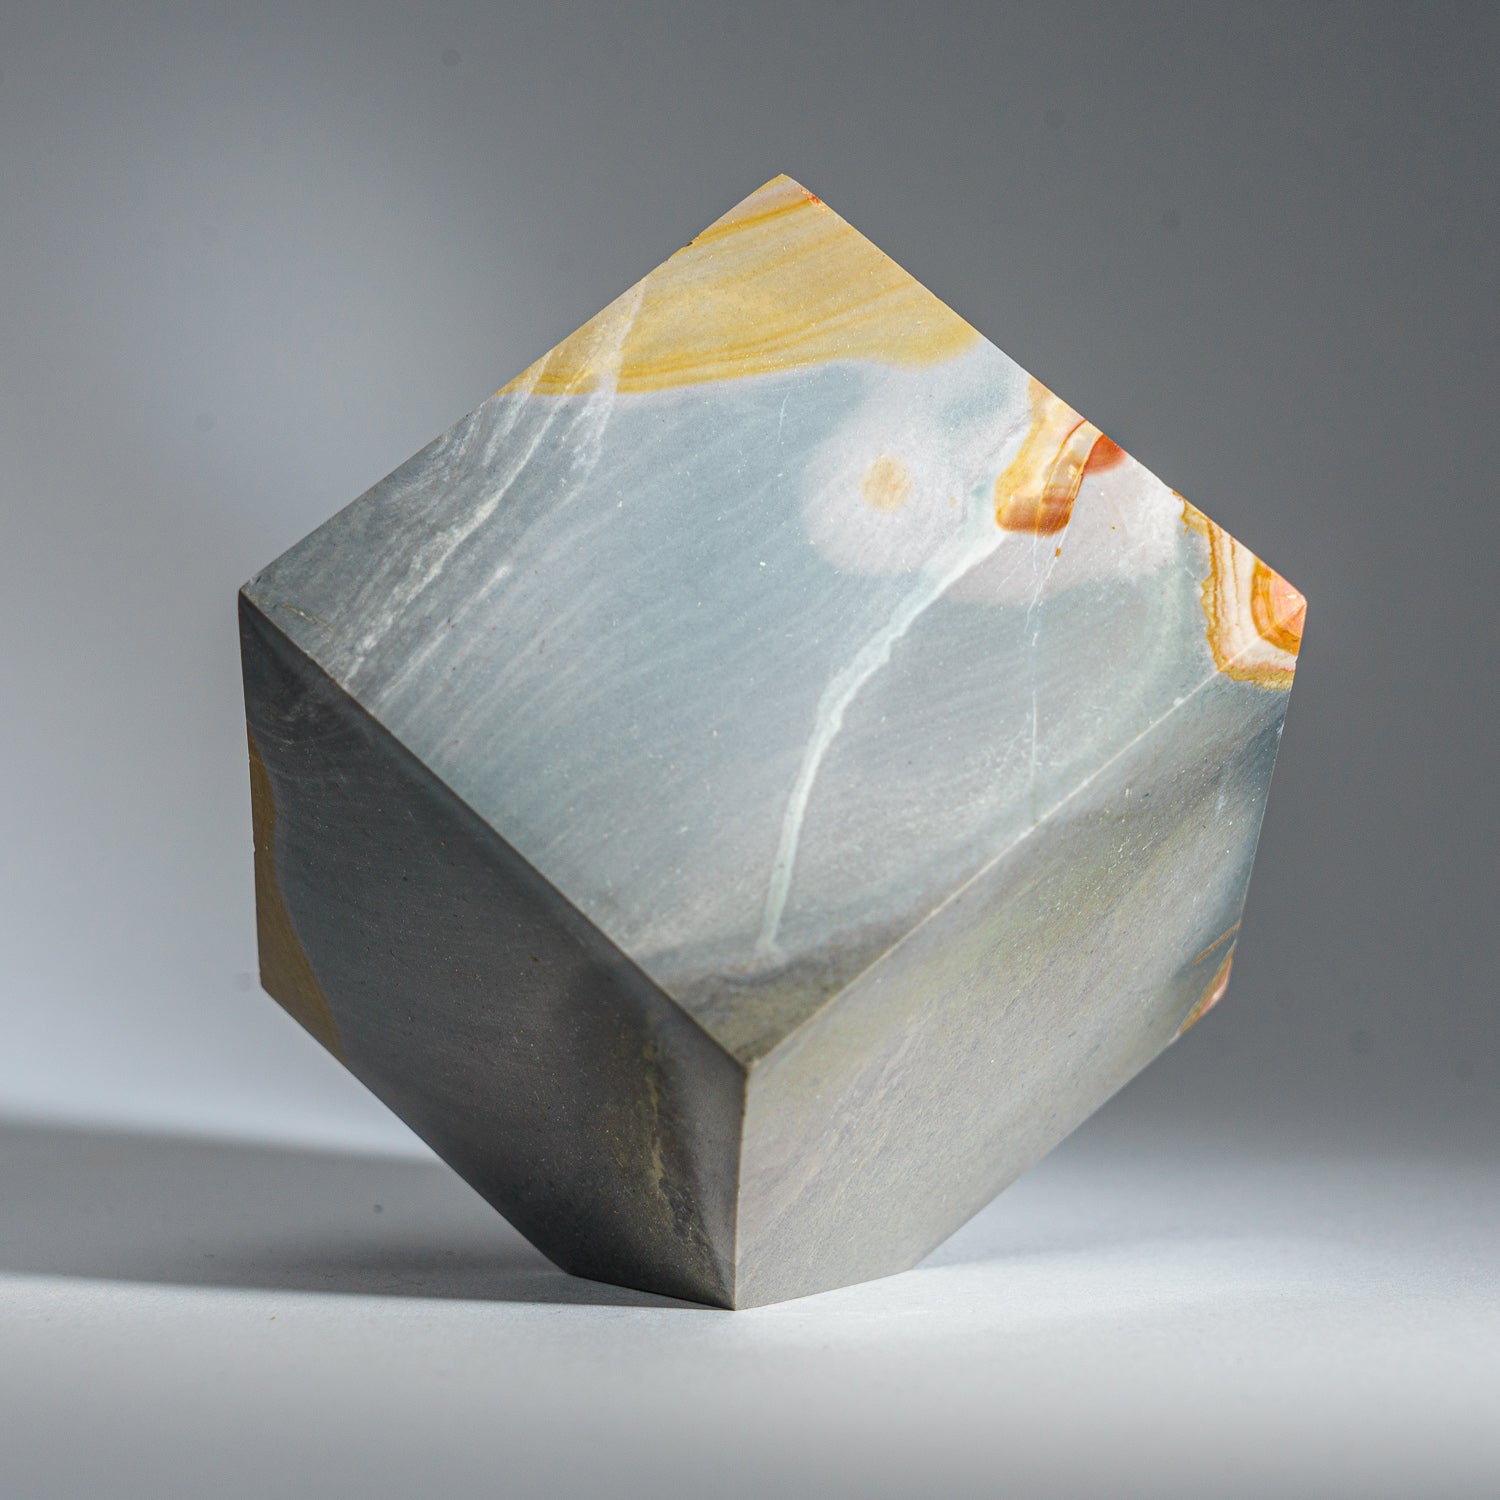 Polished Polychrome Jasper Cube from Madagascar (3.15 lbs)